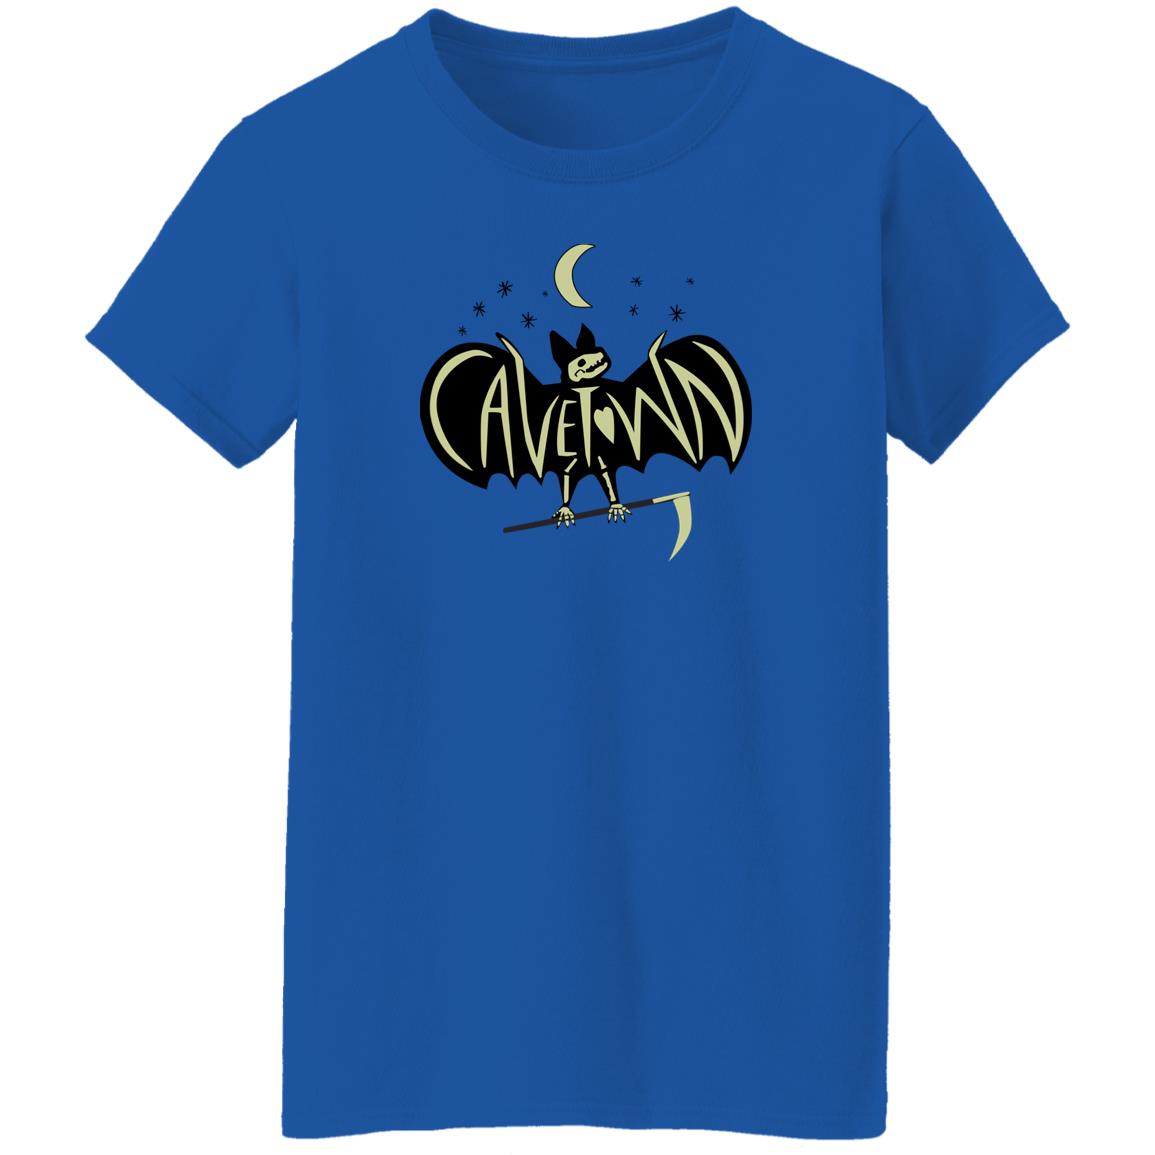 Robbie Jarett Sitter Cavetown Glow Bat Shirt Jarett Sitter Cavetown Shop Glow Bat Shirt